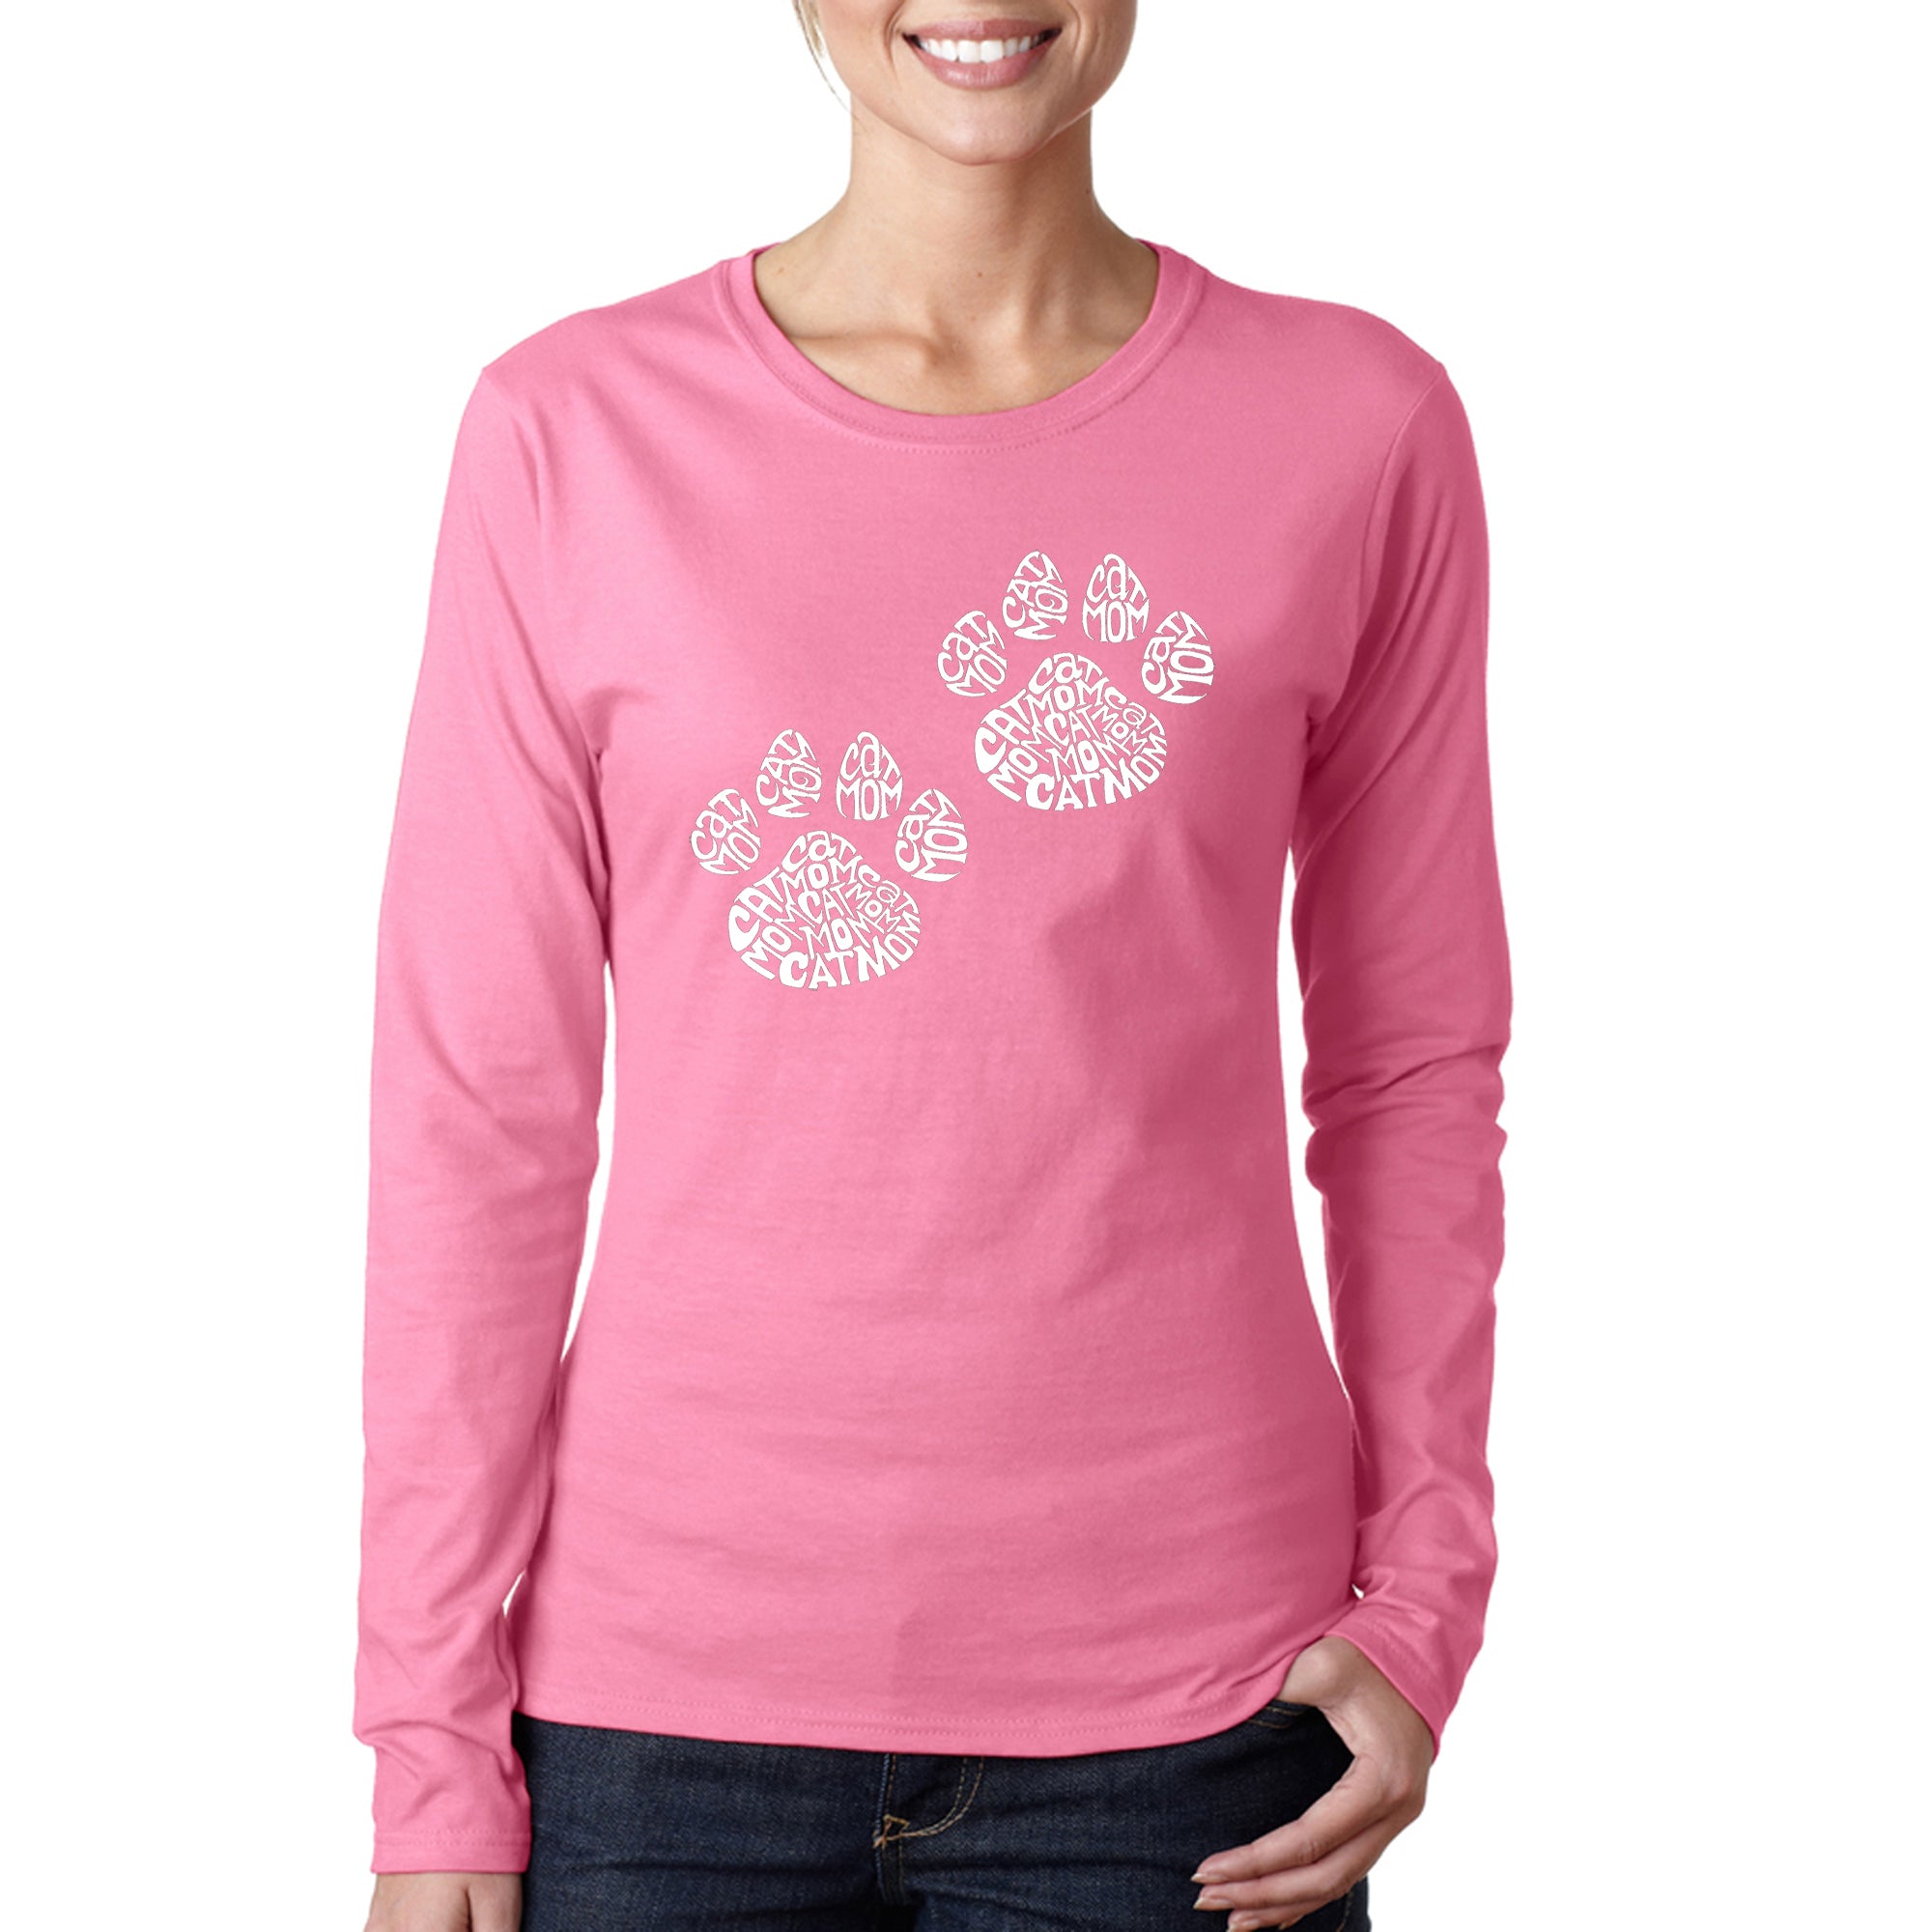 Cat Mom - Women's Word Art Long Sleeve T-Shirt - Pink - Small